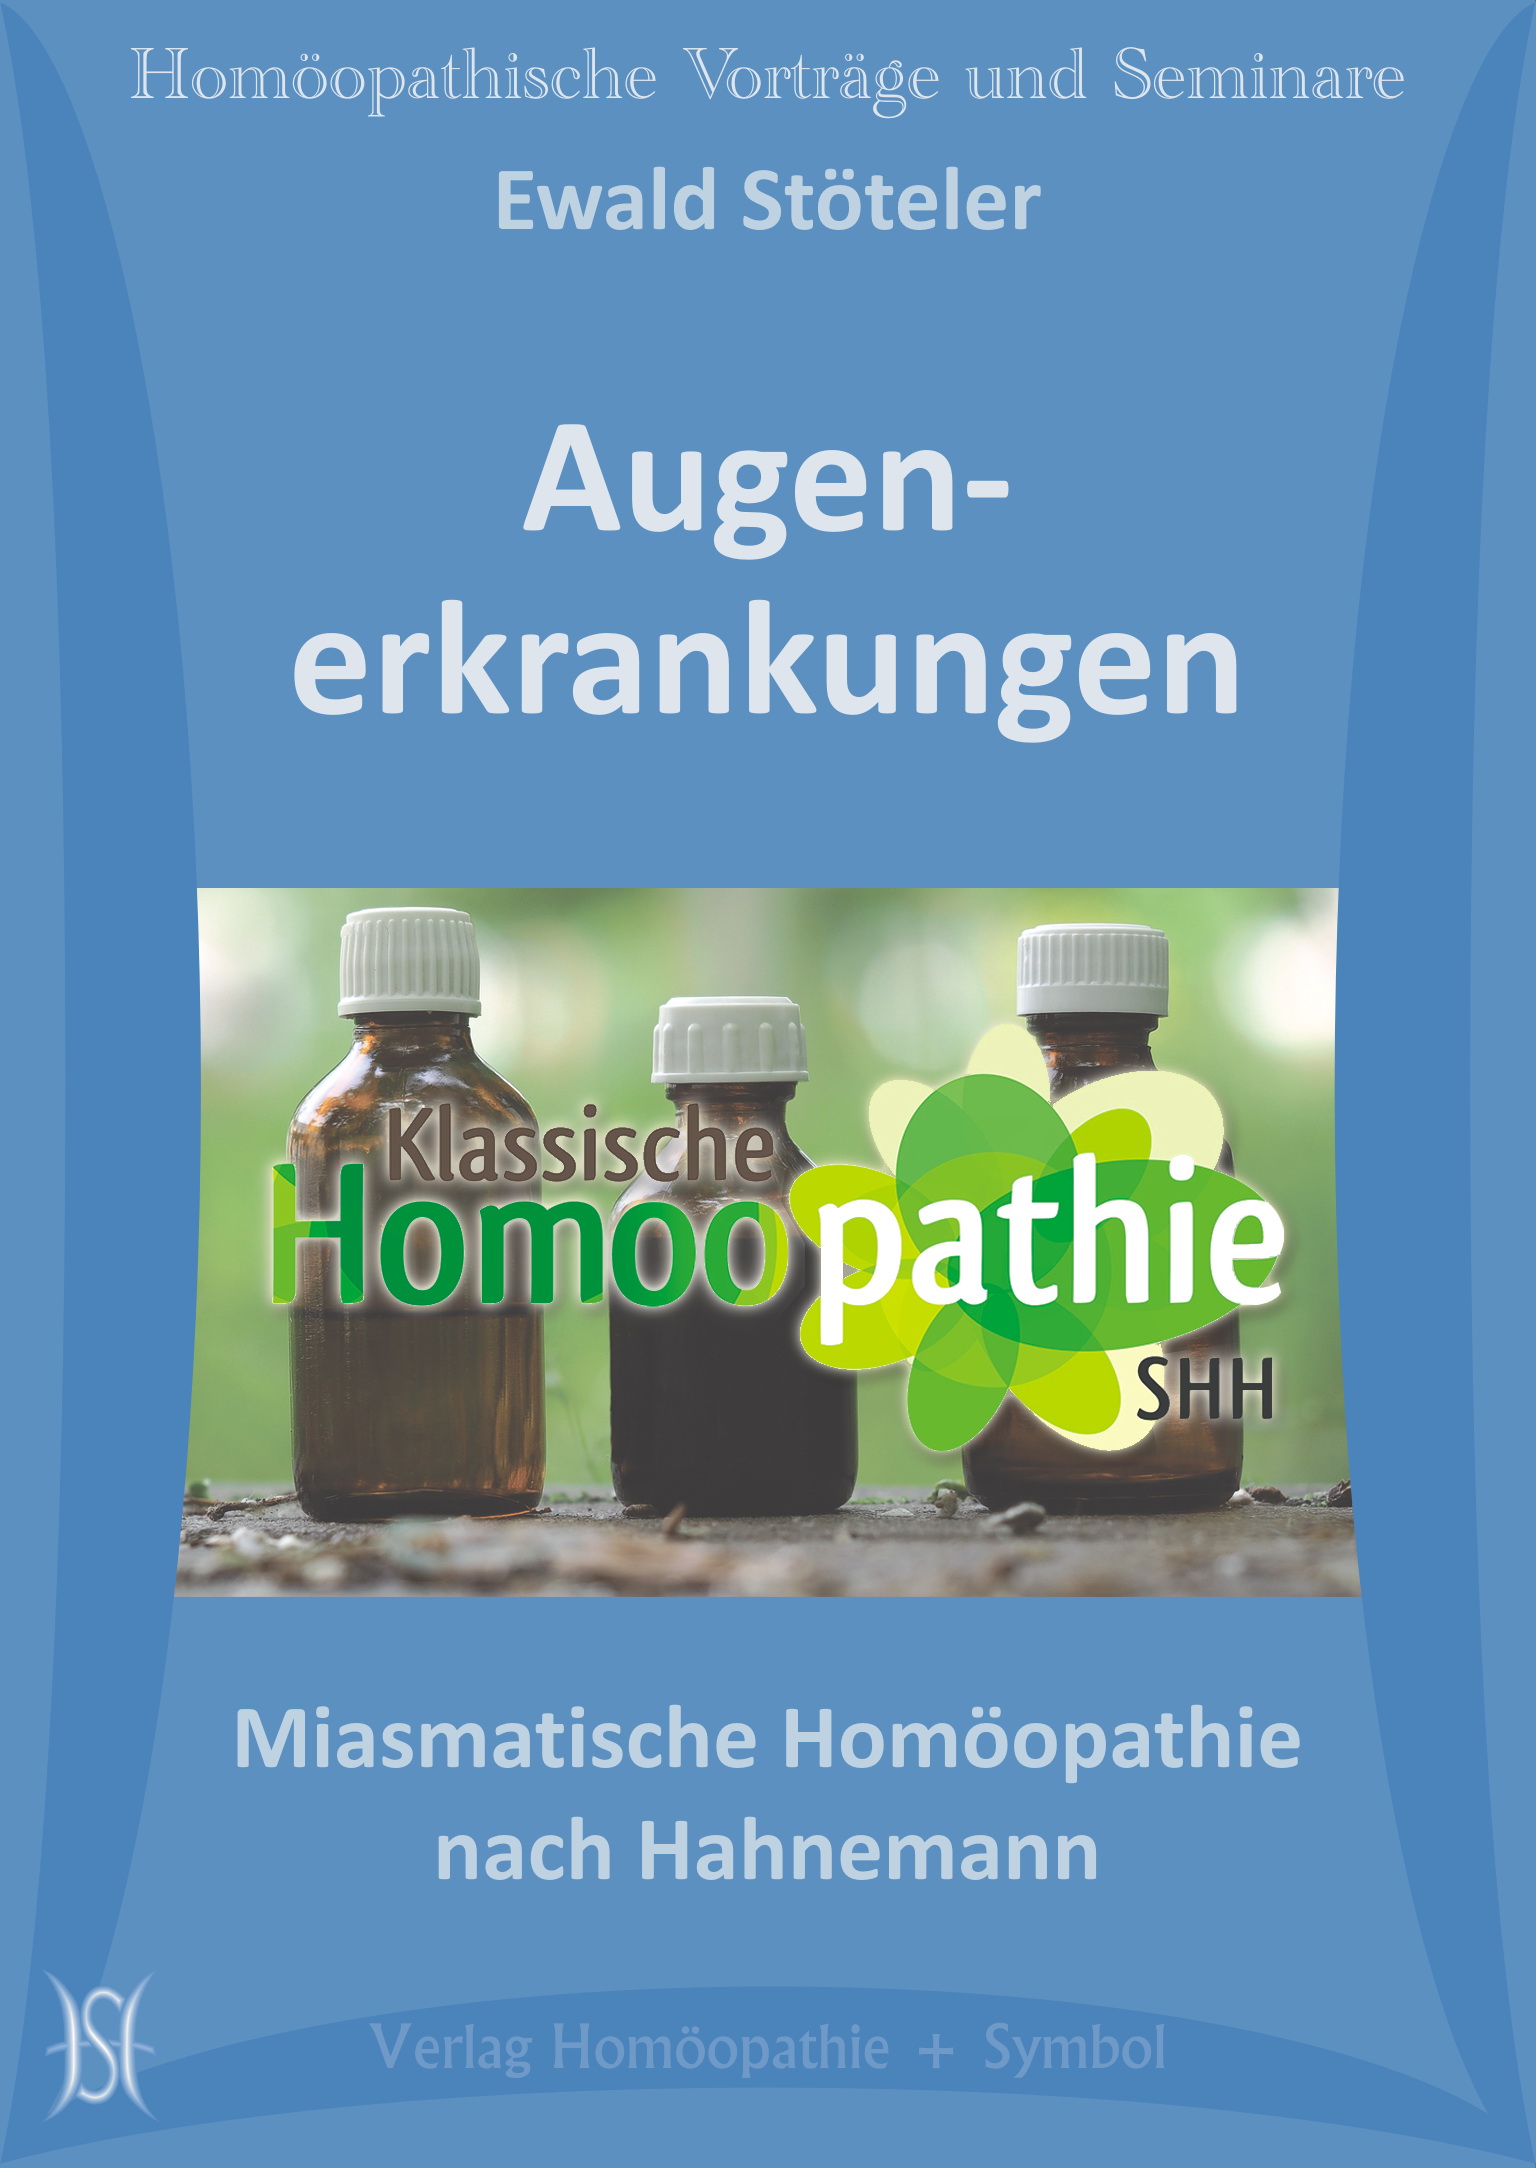 Verlag Homöopathie + Symbol